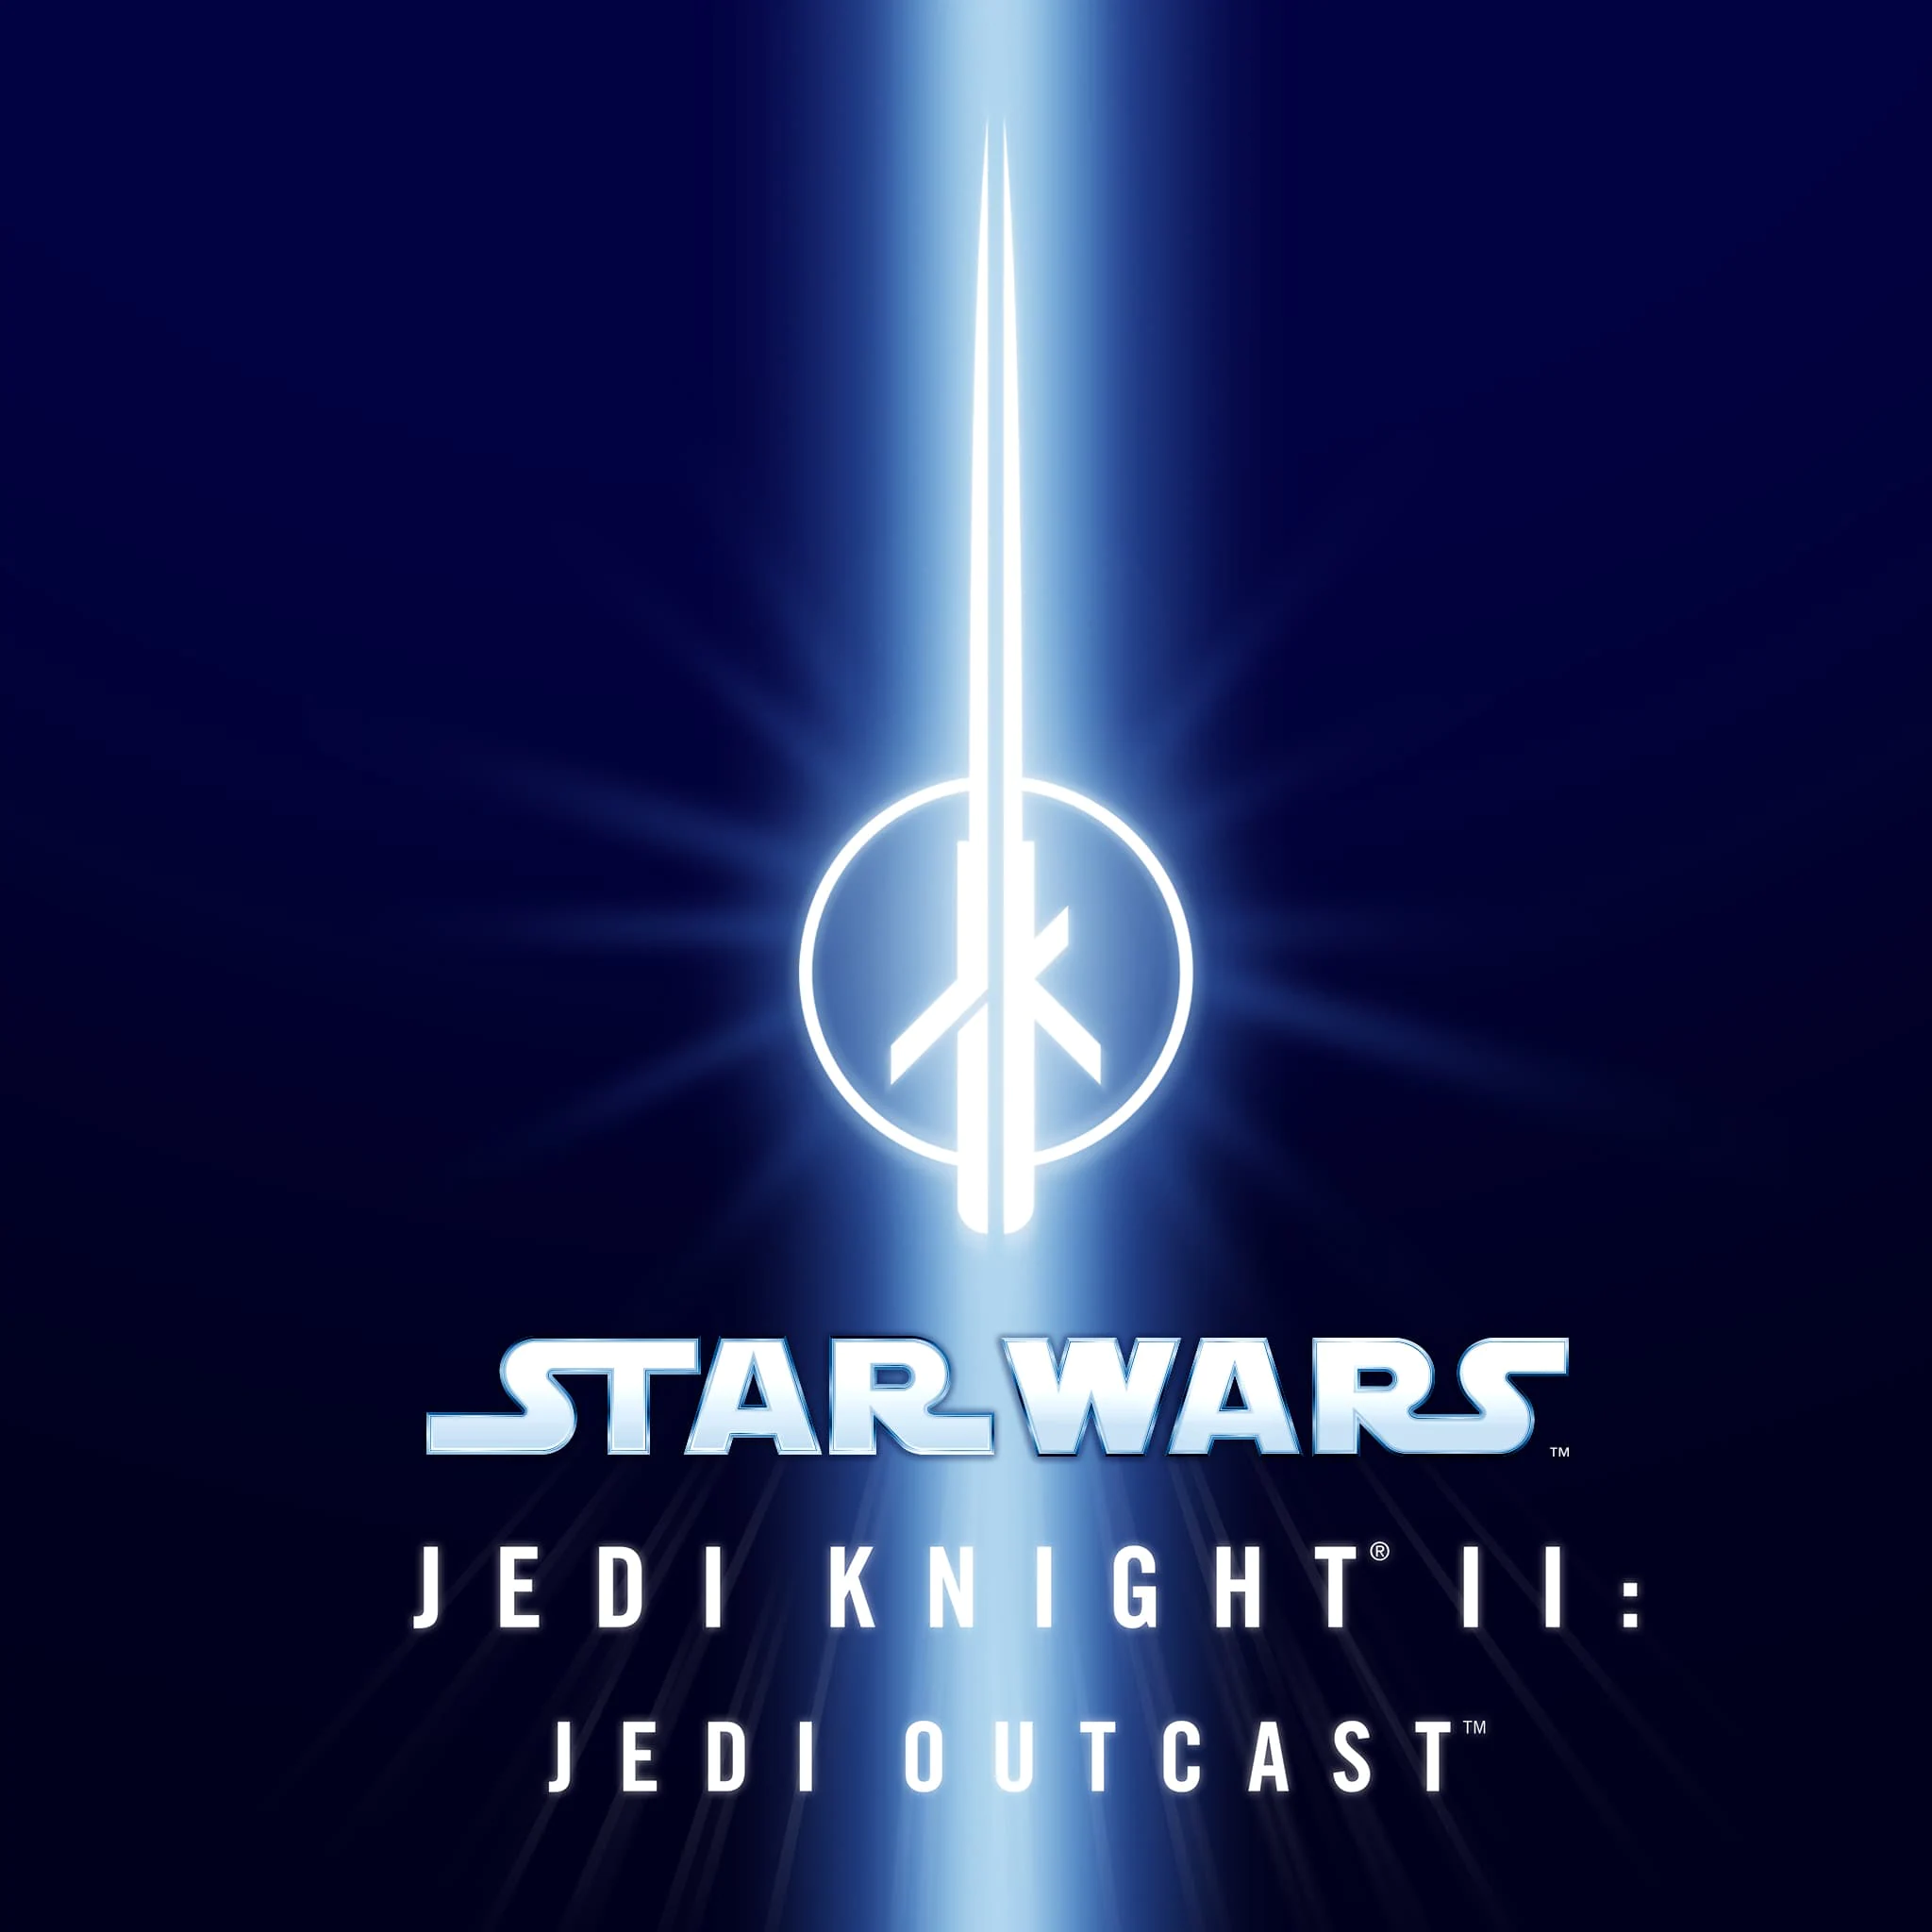 0836 - Star Wars Jedi Knight 2 Jedi Outcast/